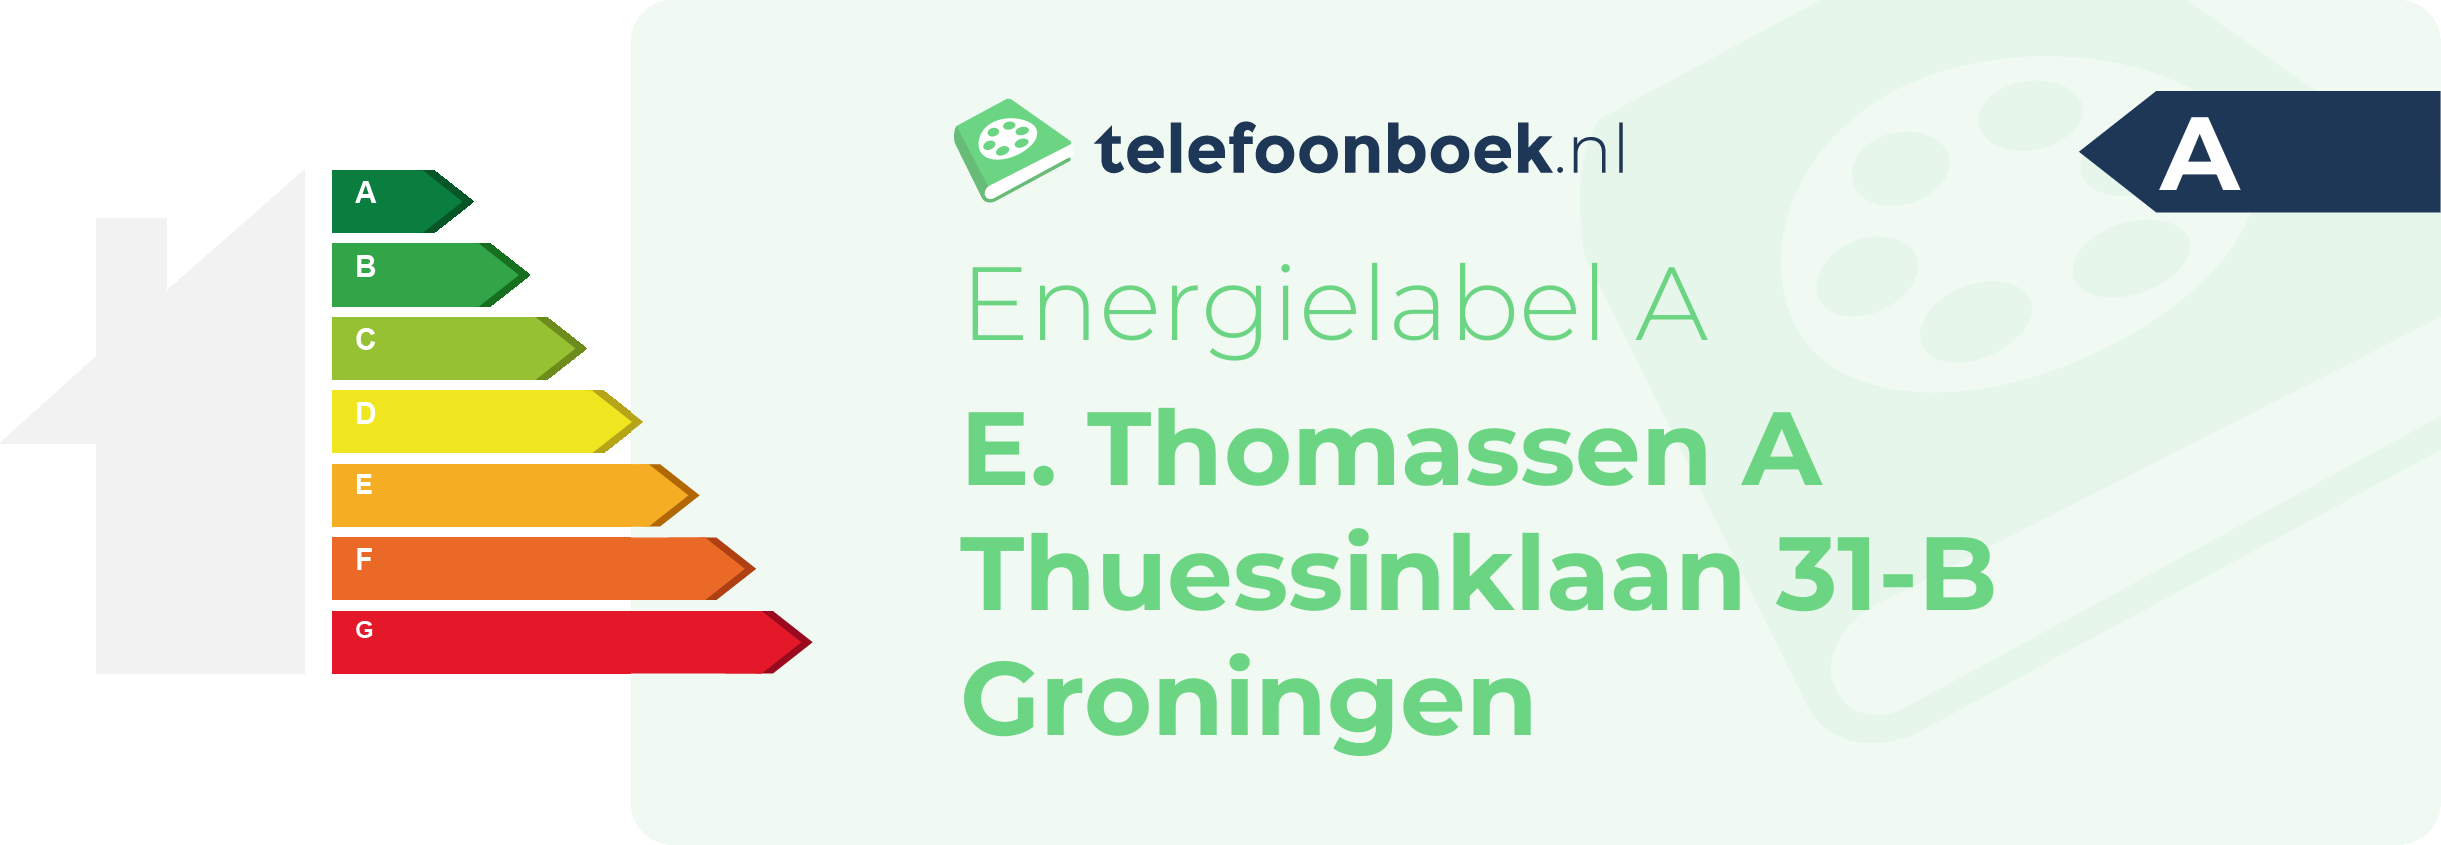 Energielabel E. Thomassen A Thuessinklaan 31-B Groningen